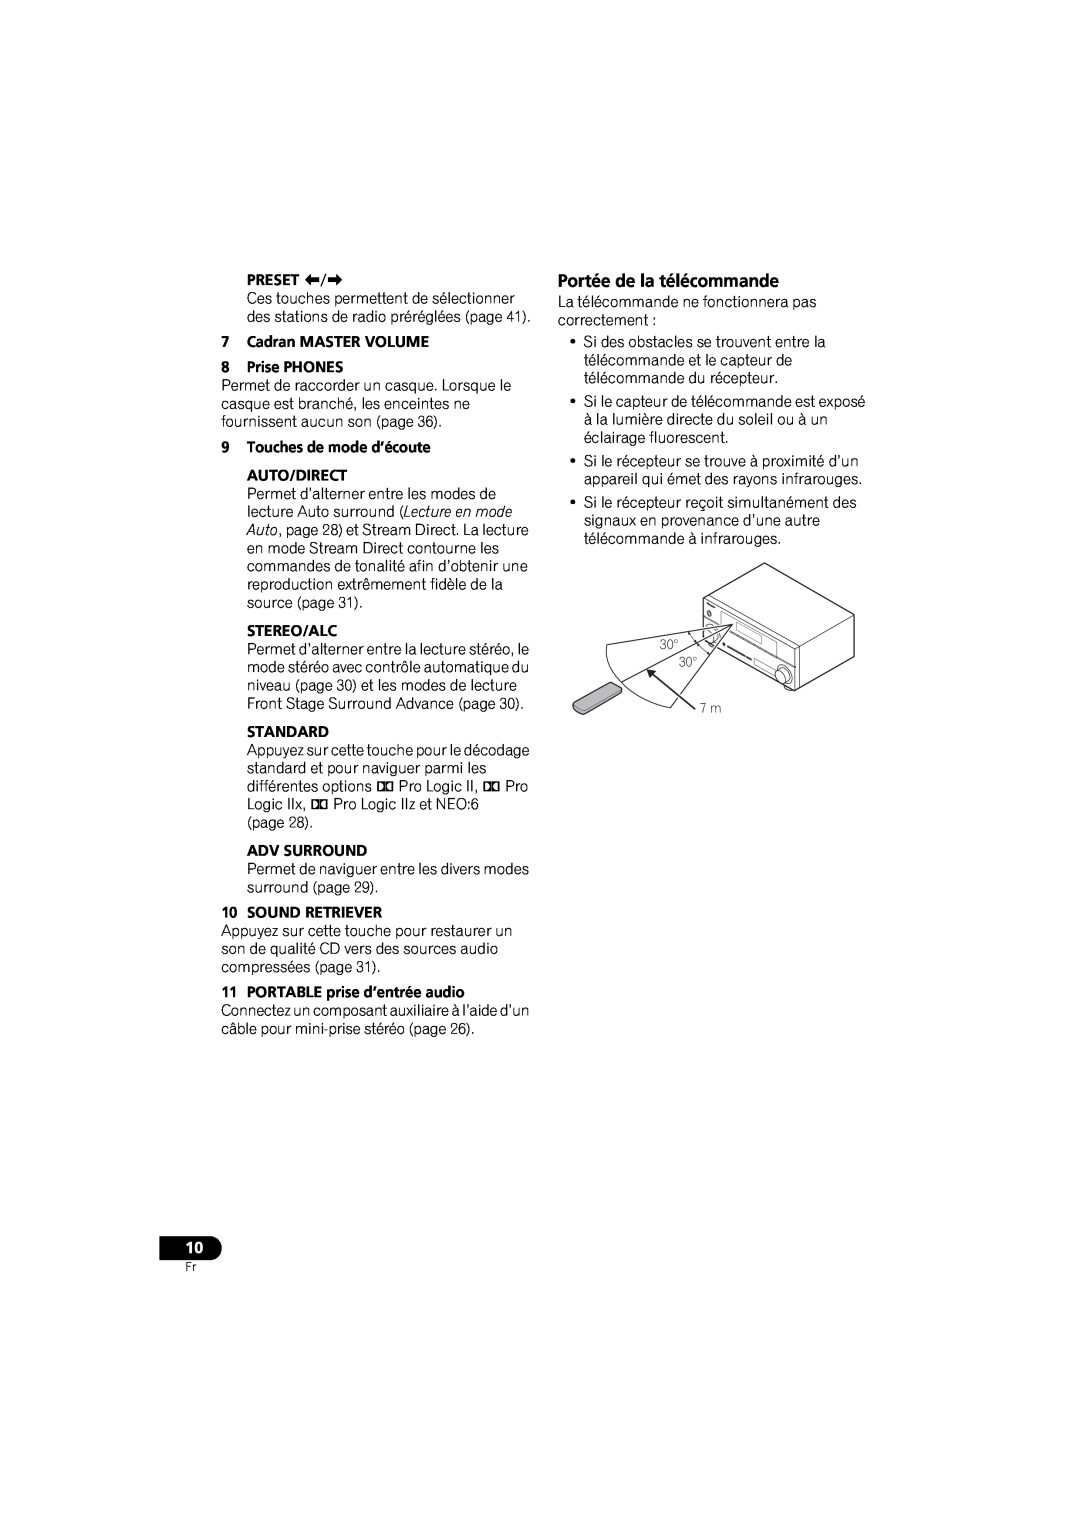 Pioneer VSX-520 manual Portée de la télécommande, Preset /, 7Cadran MASTER VOLUME 8Prise PHONES, Stereo/Alc, Standard 